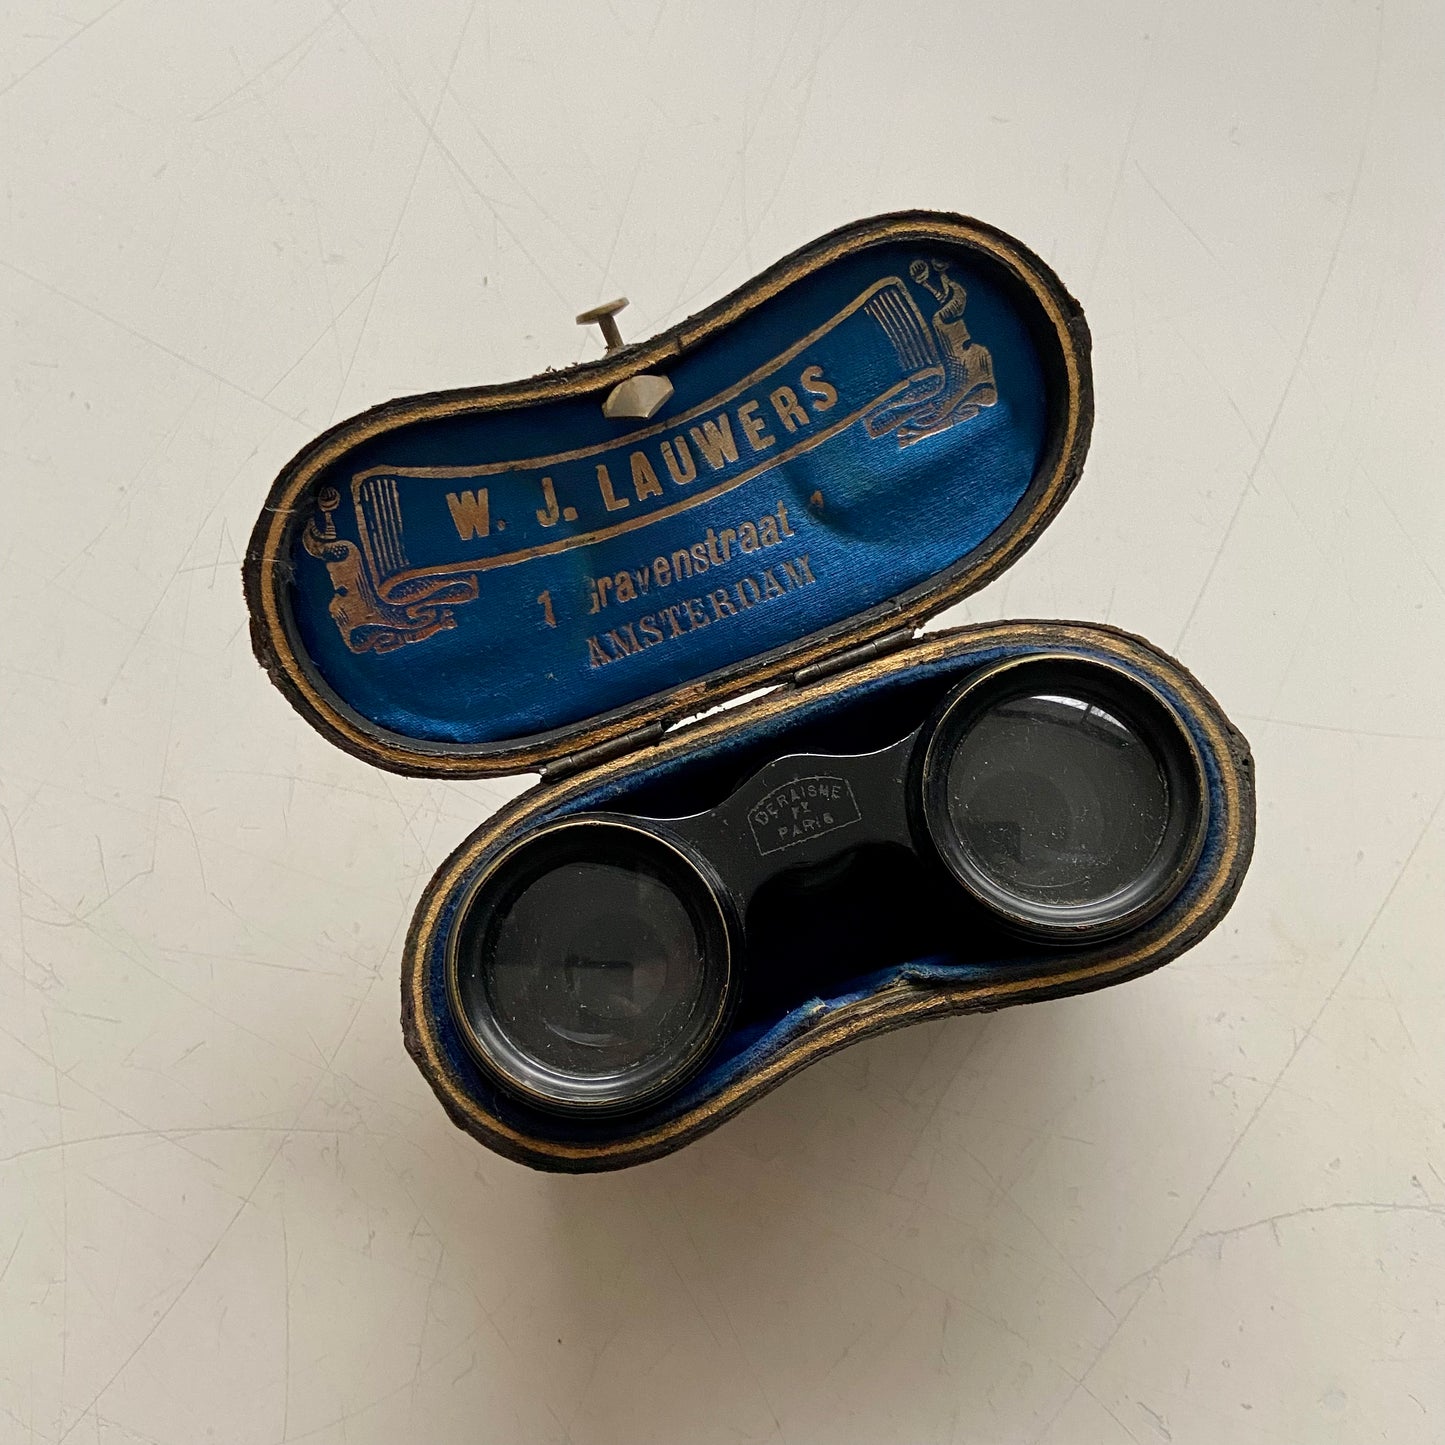 Theatre binoculars / opera glasses, Deraisme Paris, 1800s